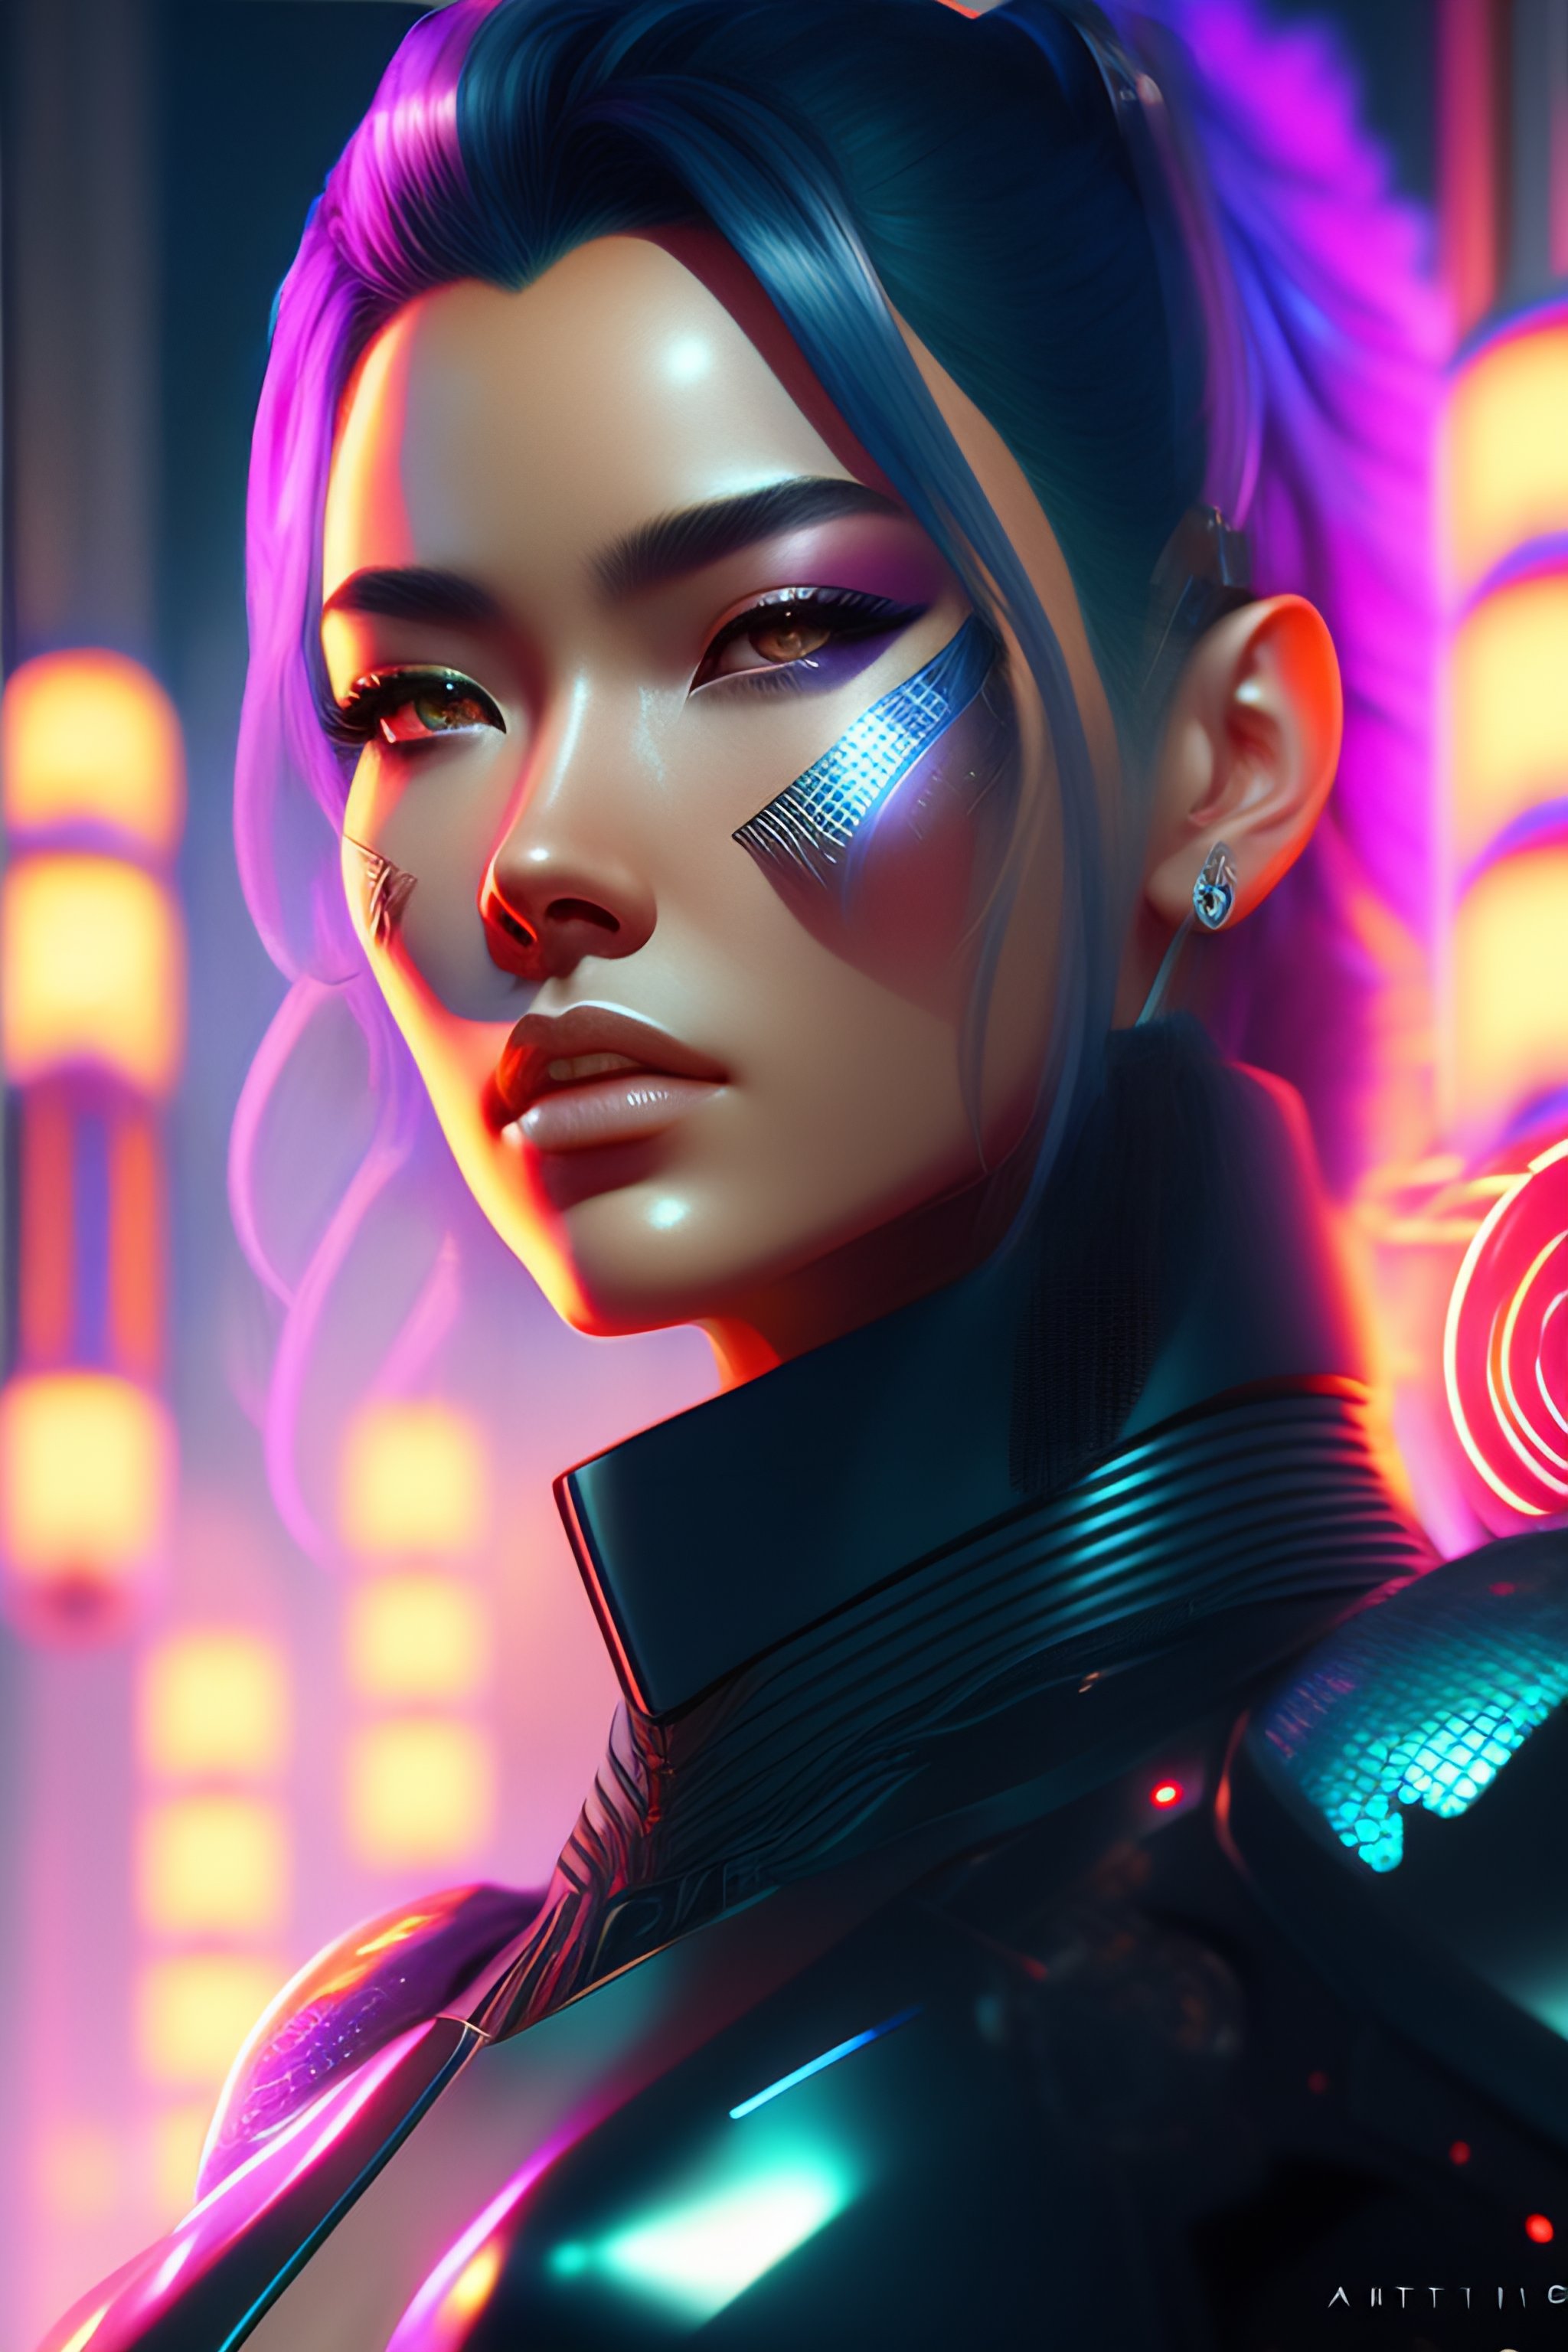 Lexica - Full body head to toe portrait of a cyberpunk sci-fi cyborg ...